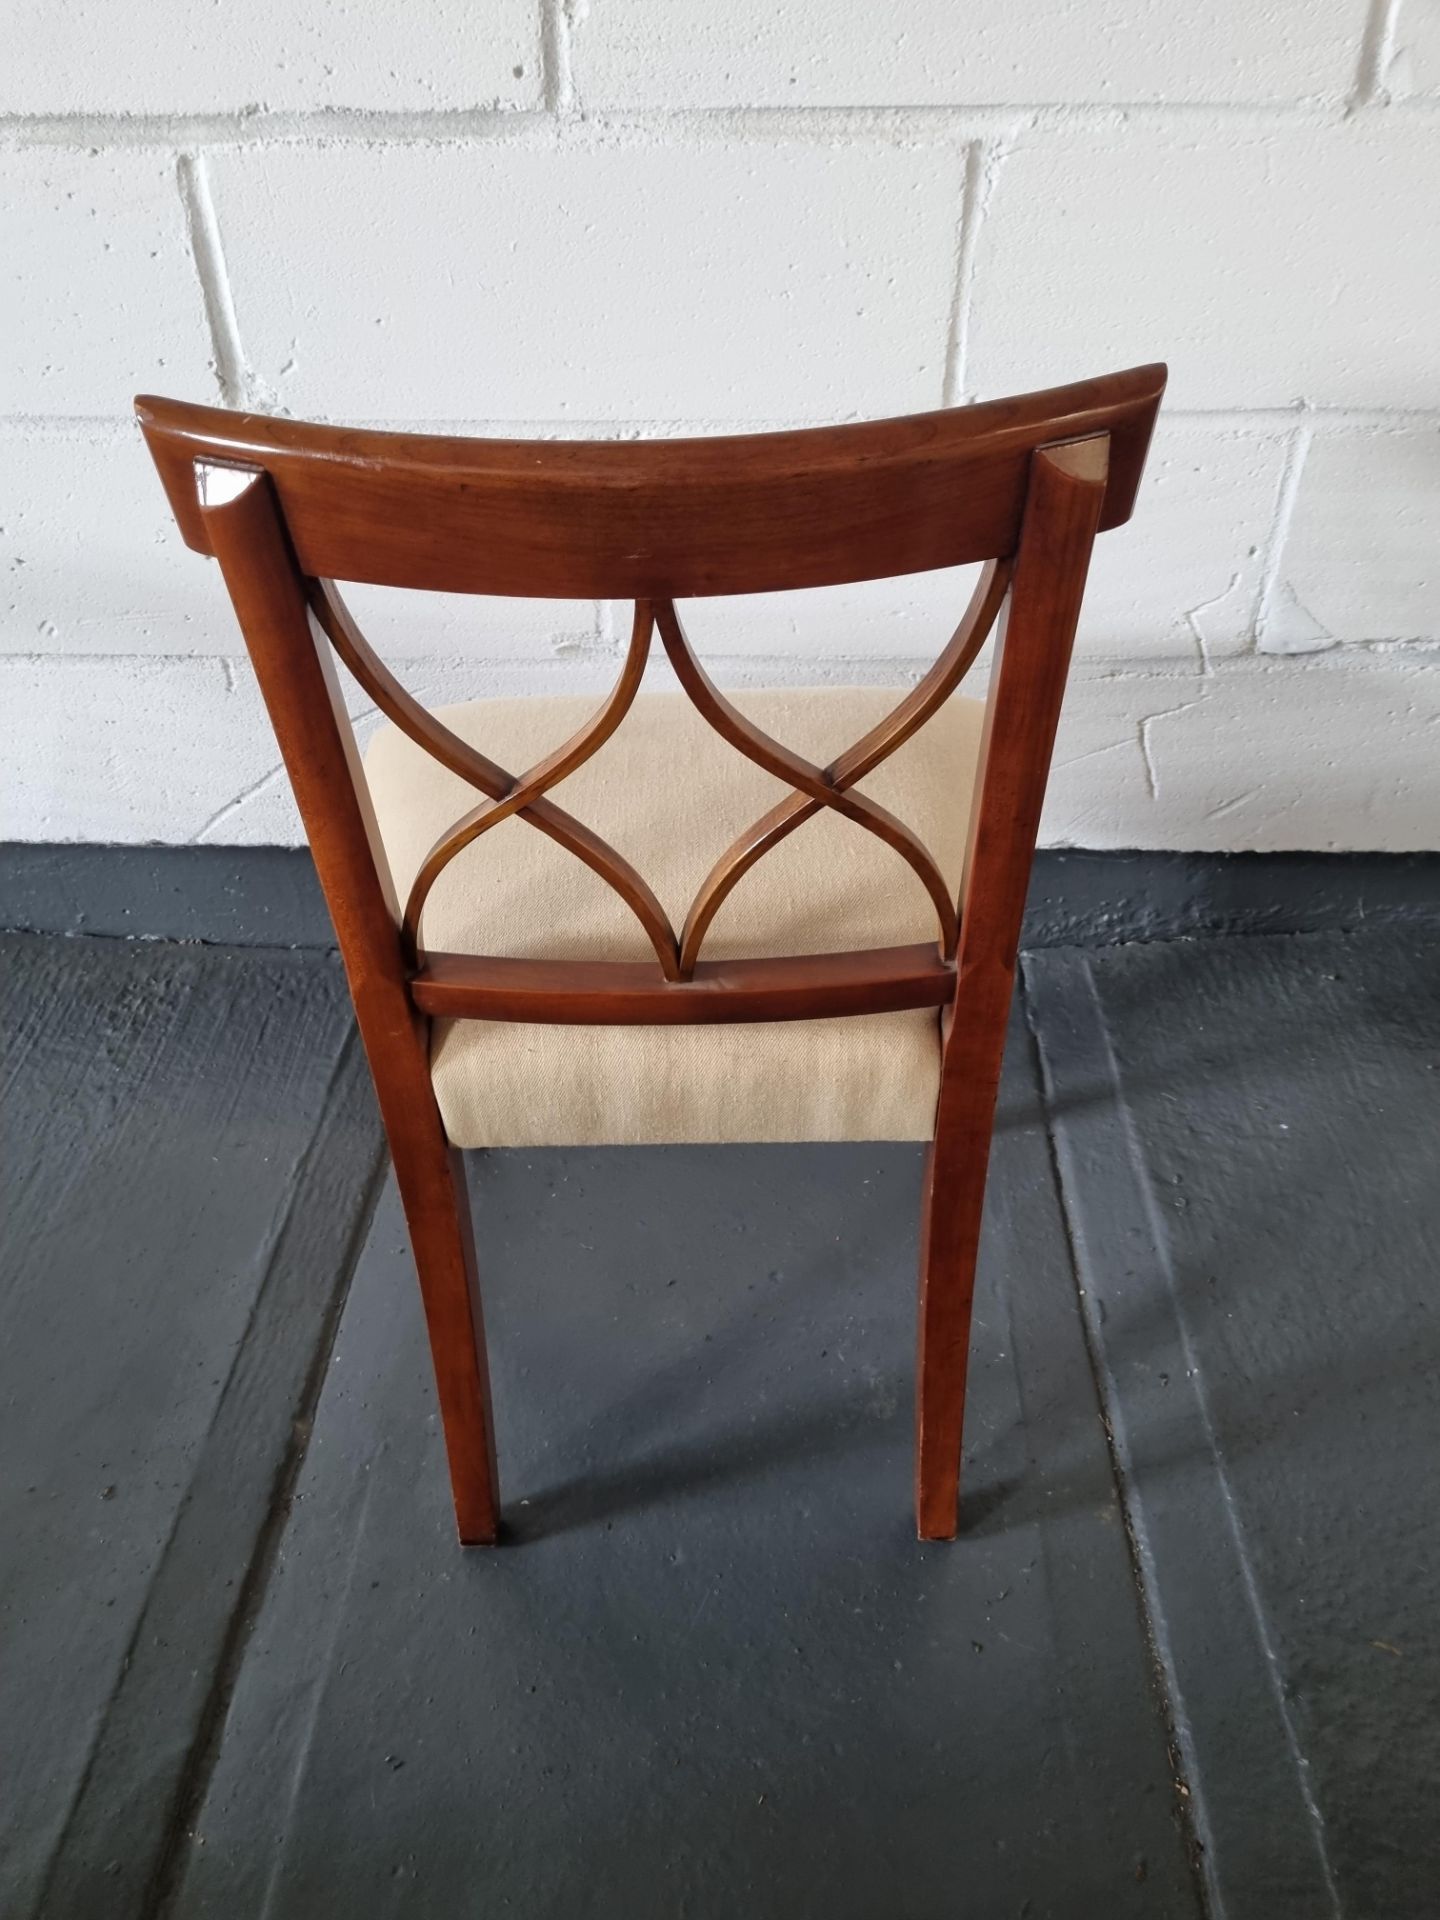 Arthur Brett Side Chair Bespoke Cream Upholstery Sheraton-Style Cherrywood Armchair With Tulip- - Image 2 of 4